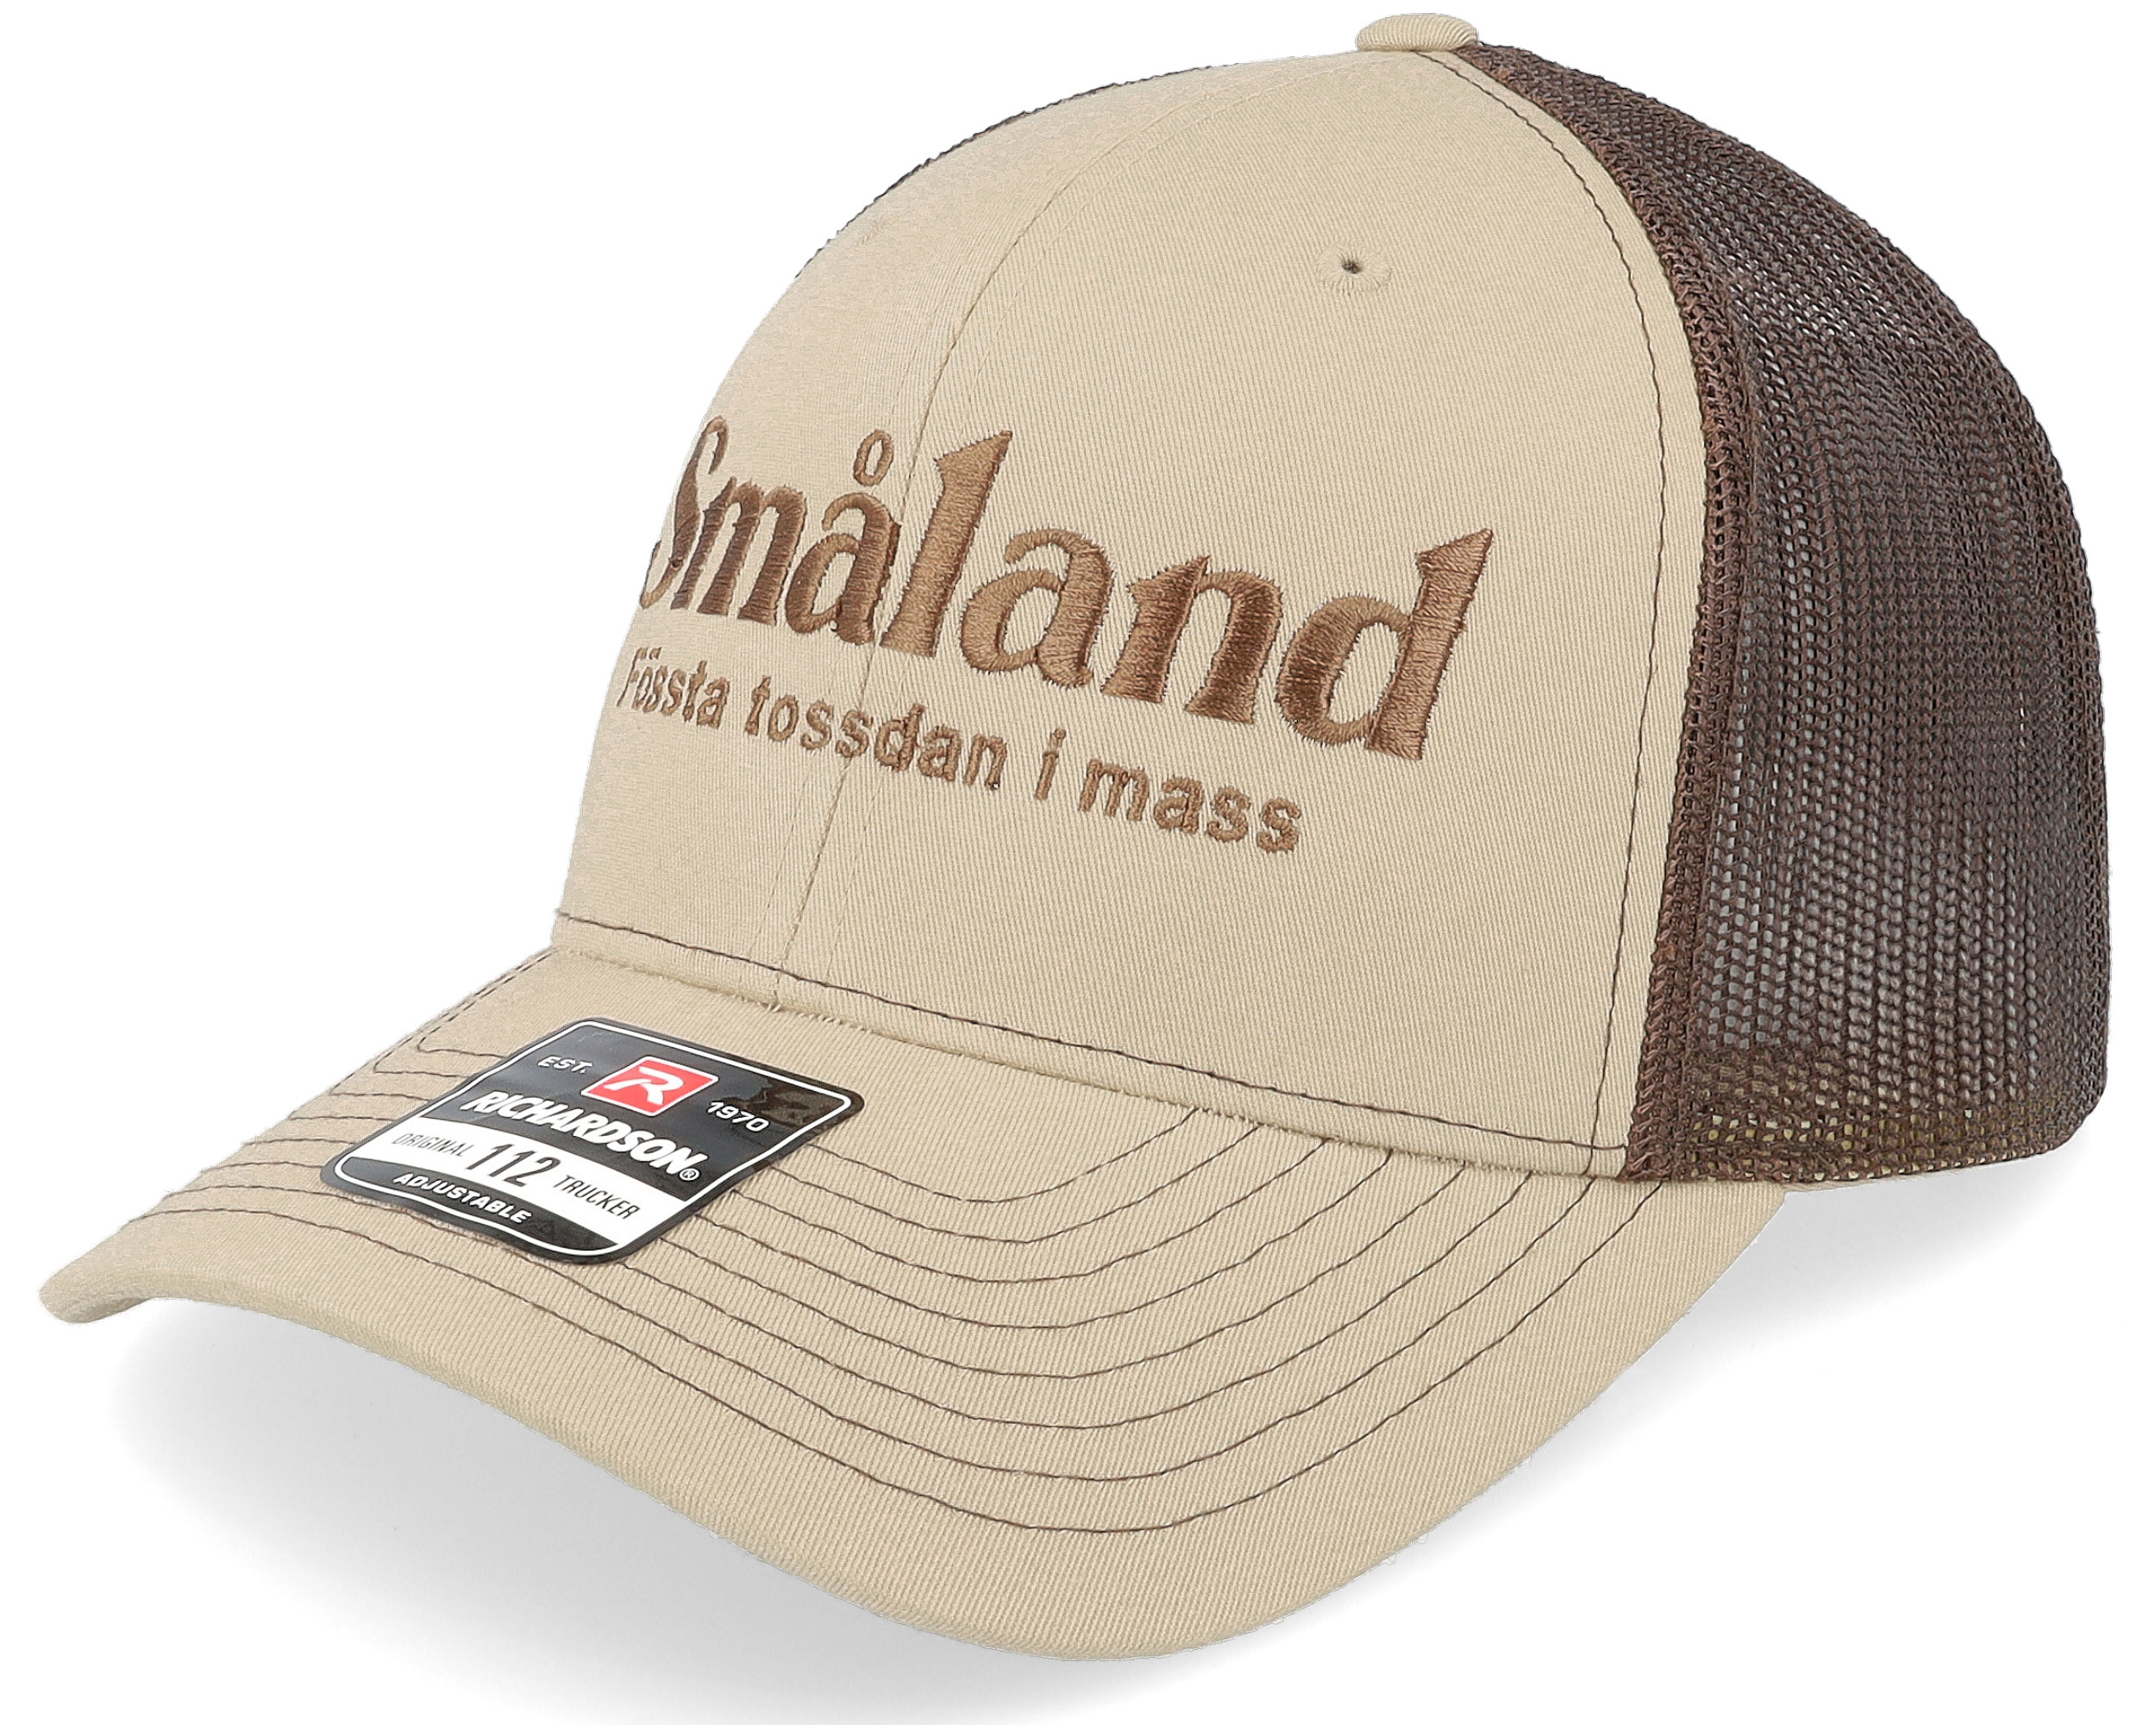 Första - Småland Khaki/Brown Tossdan Trucker Mass Iconic caps I